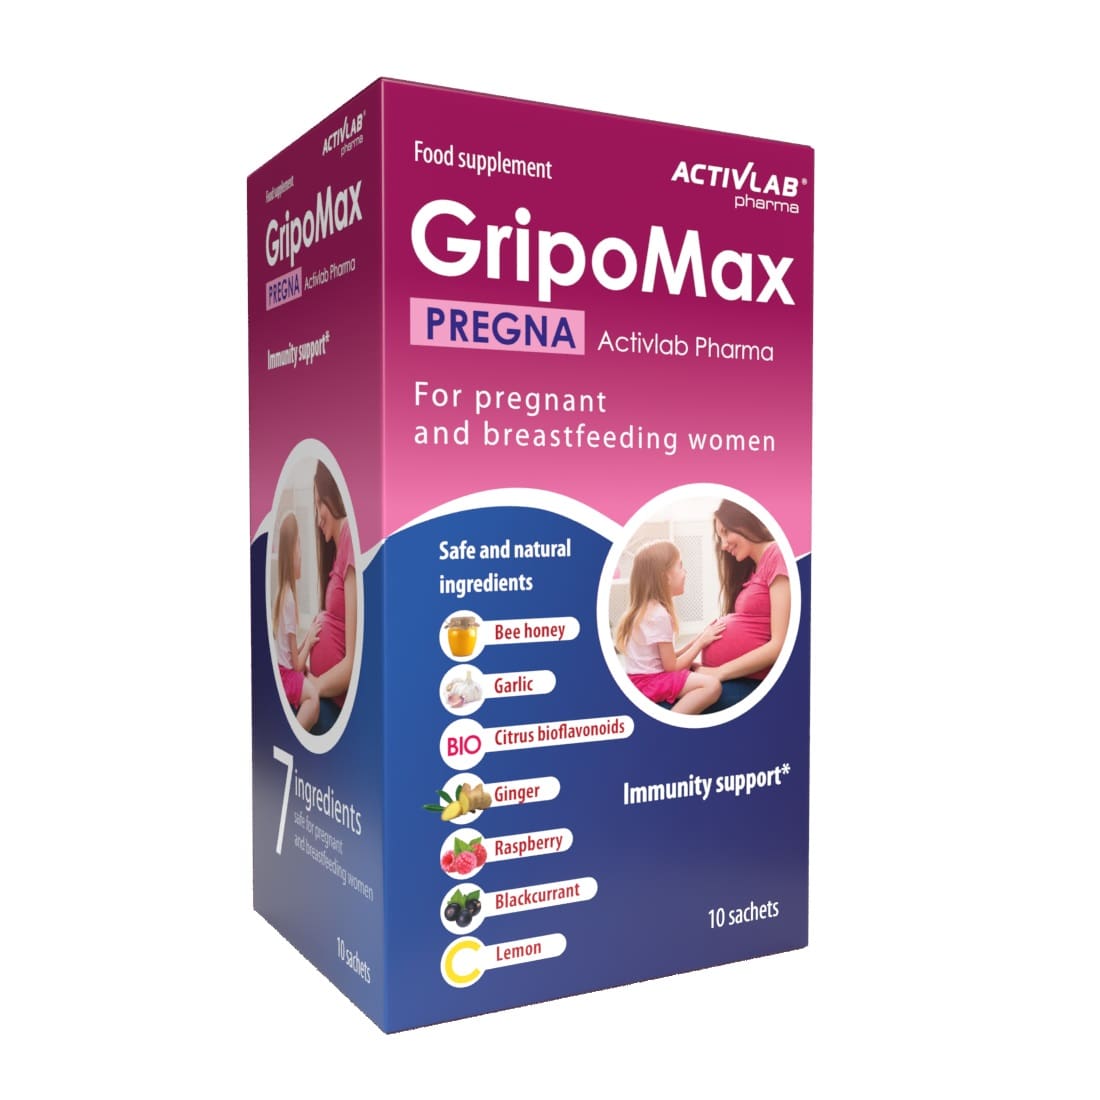 ActivLab GripoMax PREGNA - box (10 sachets x 10g)